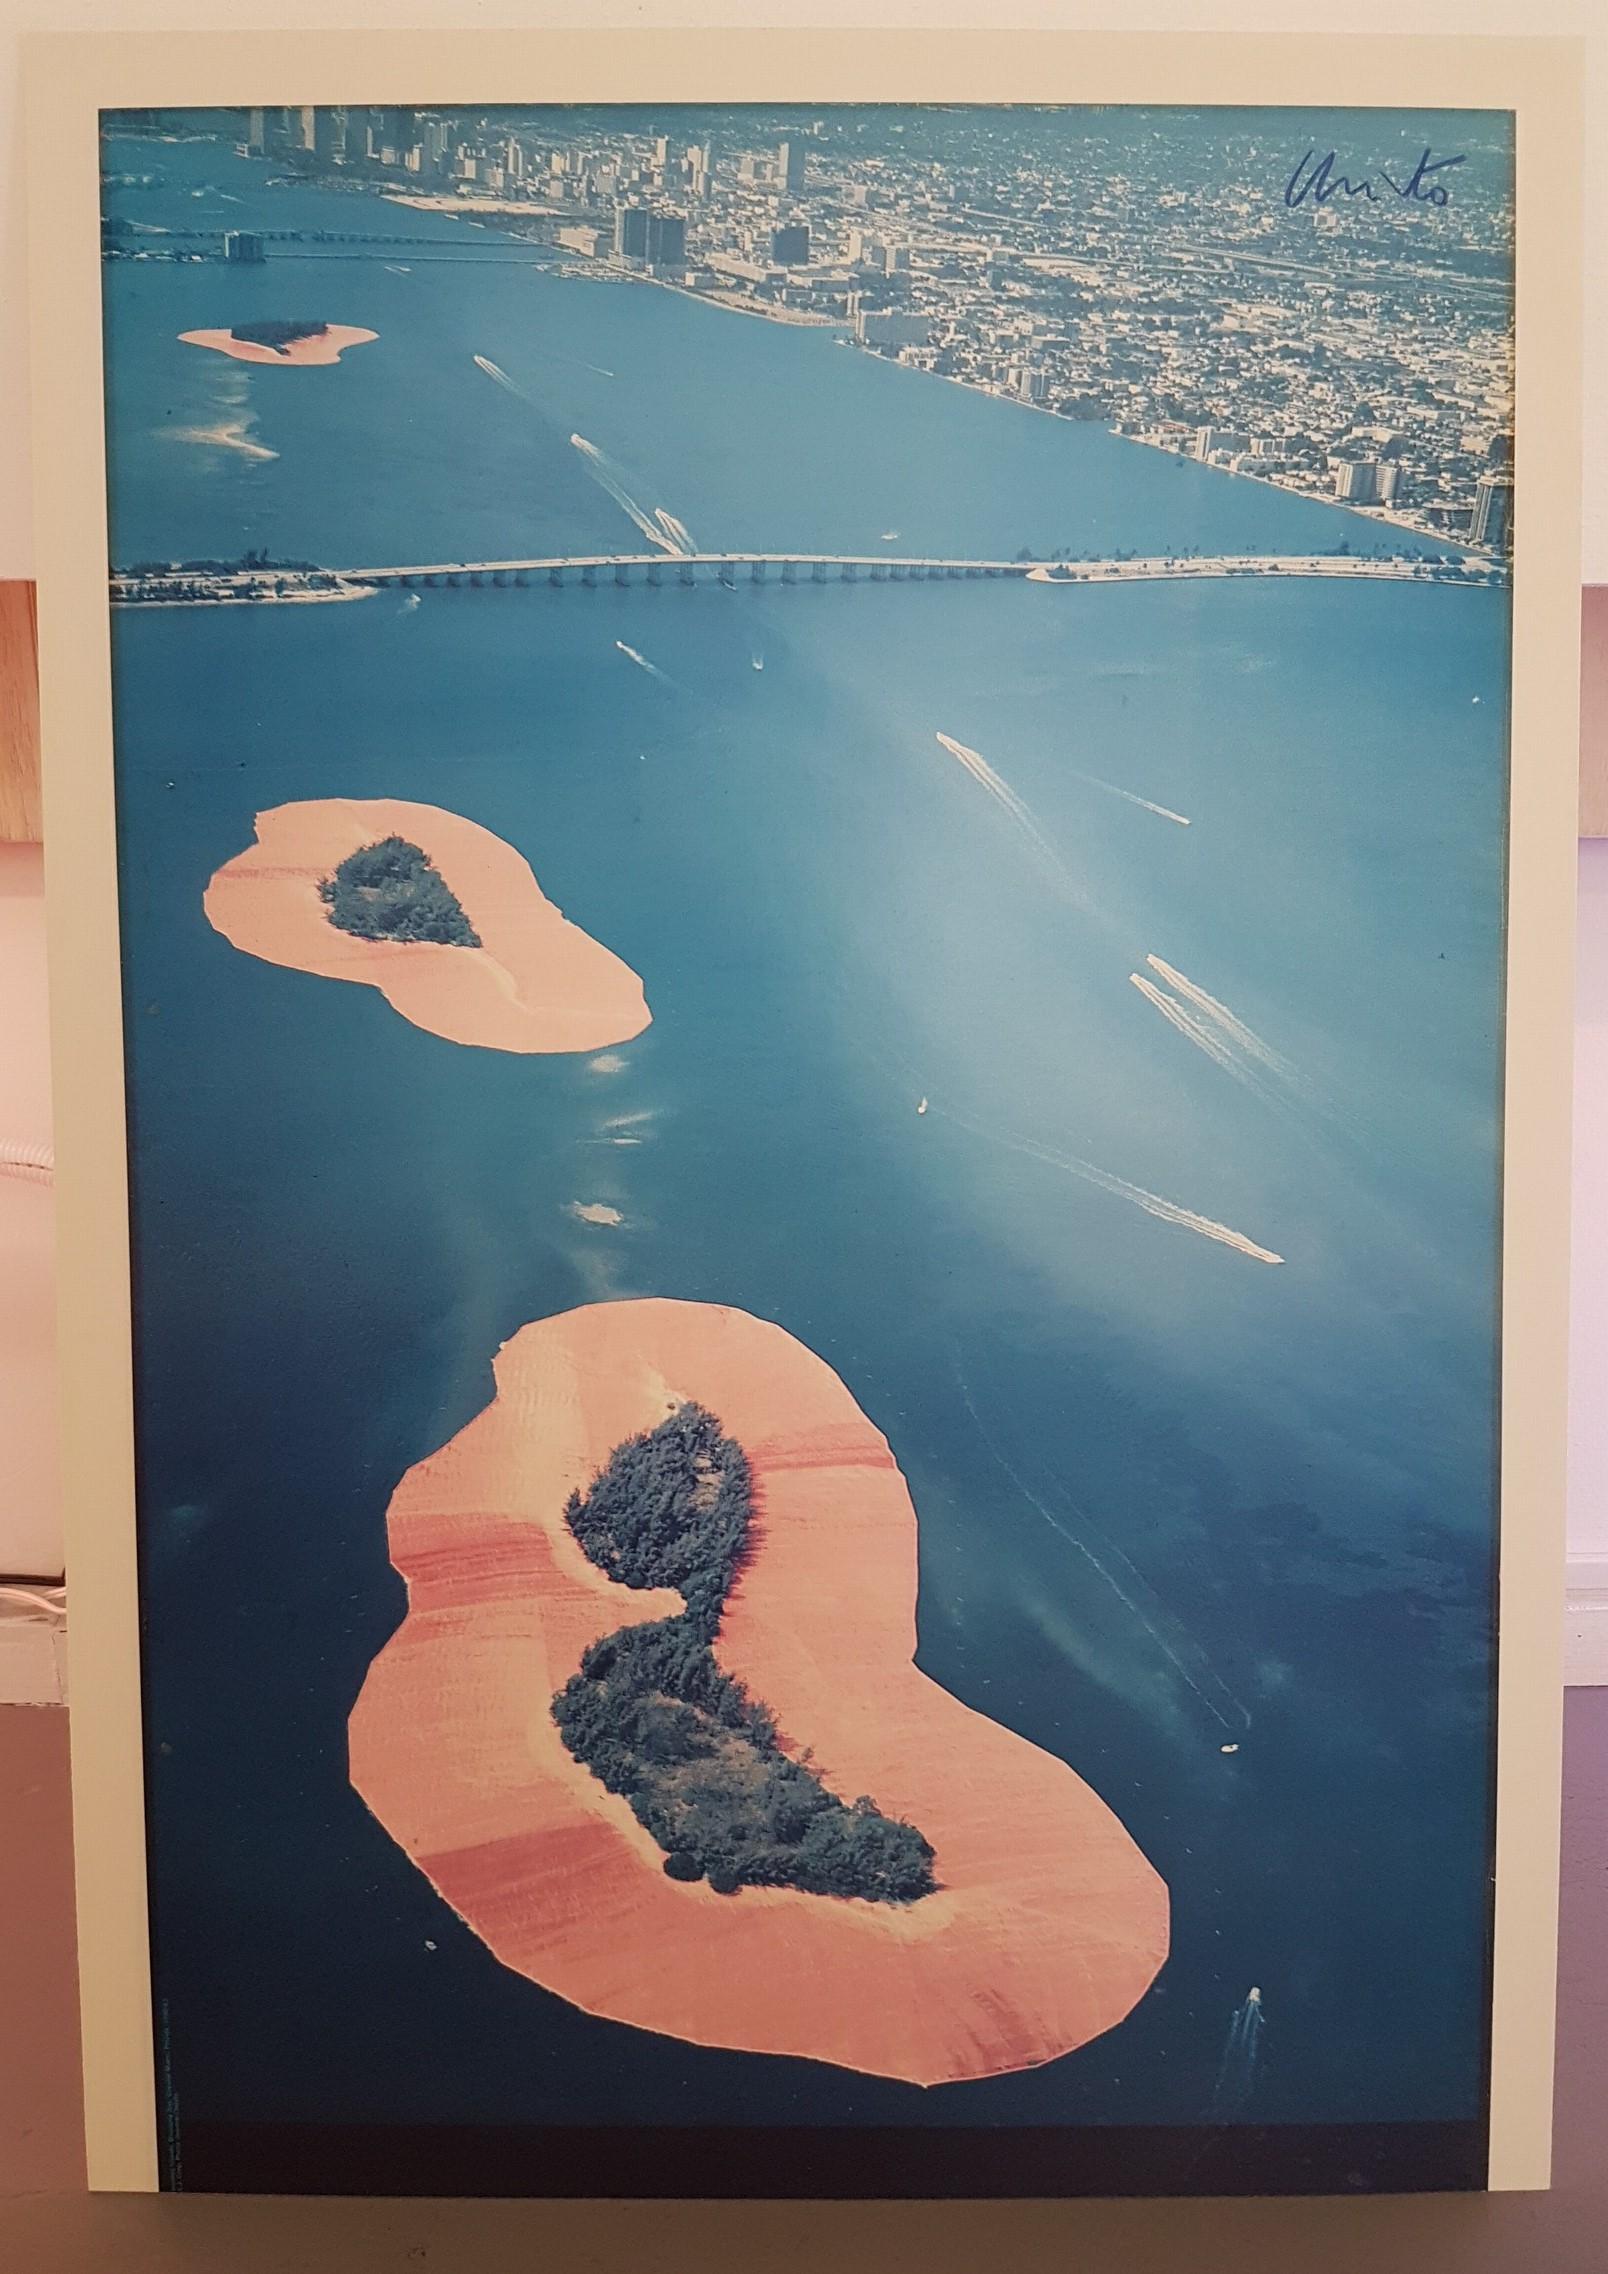 christo islands surrounded in miami florida 1983